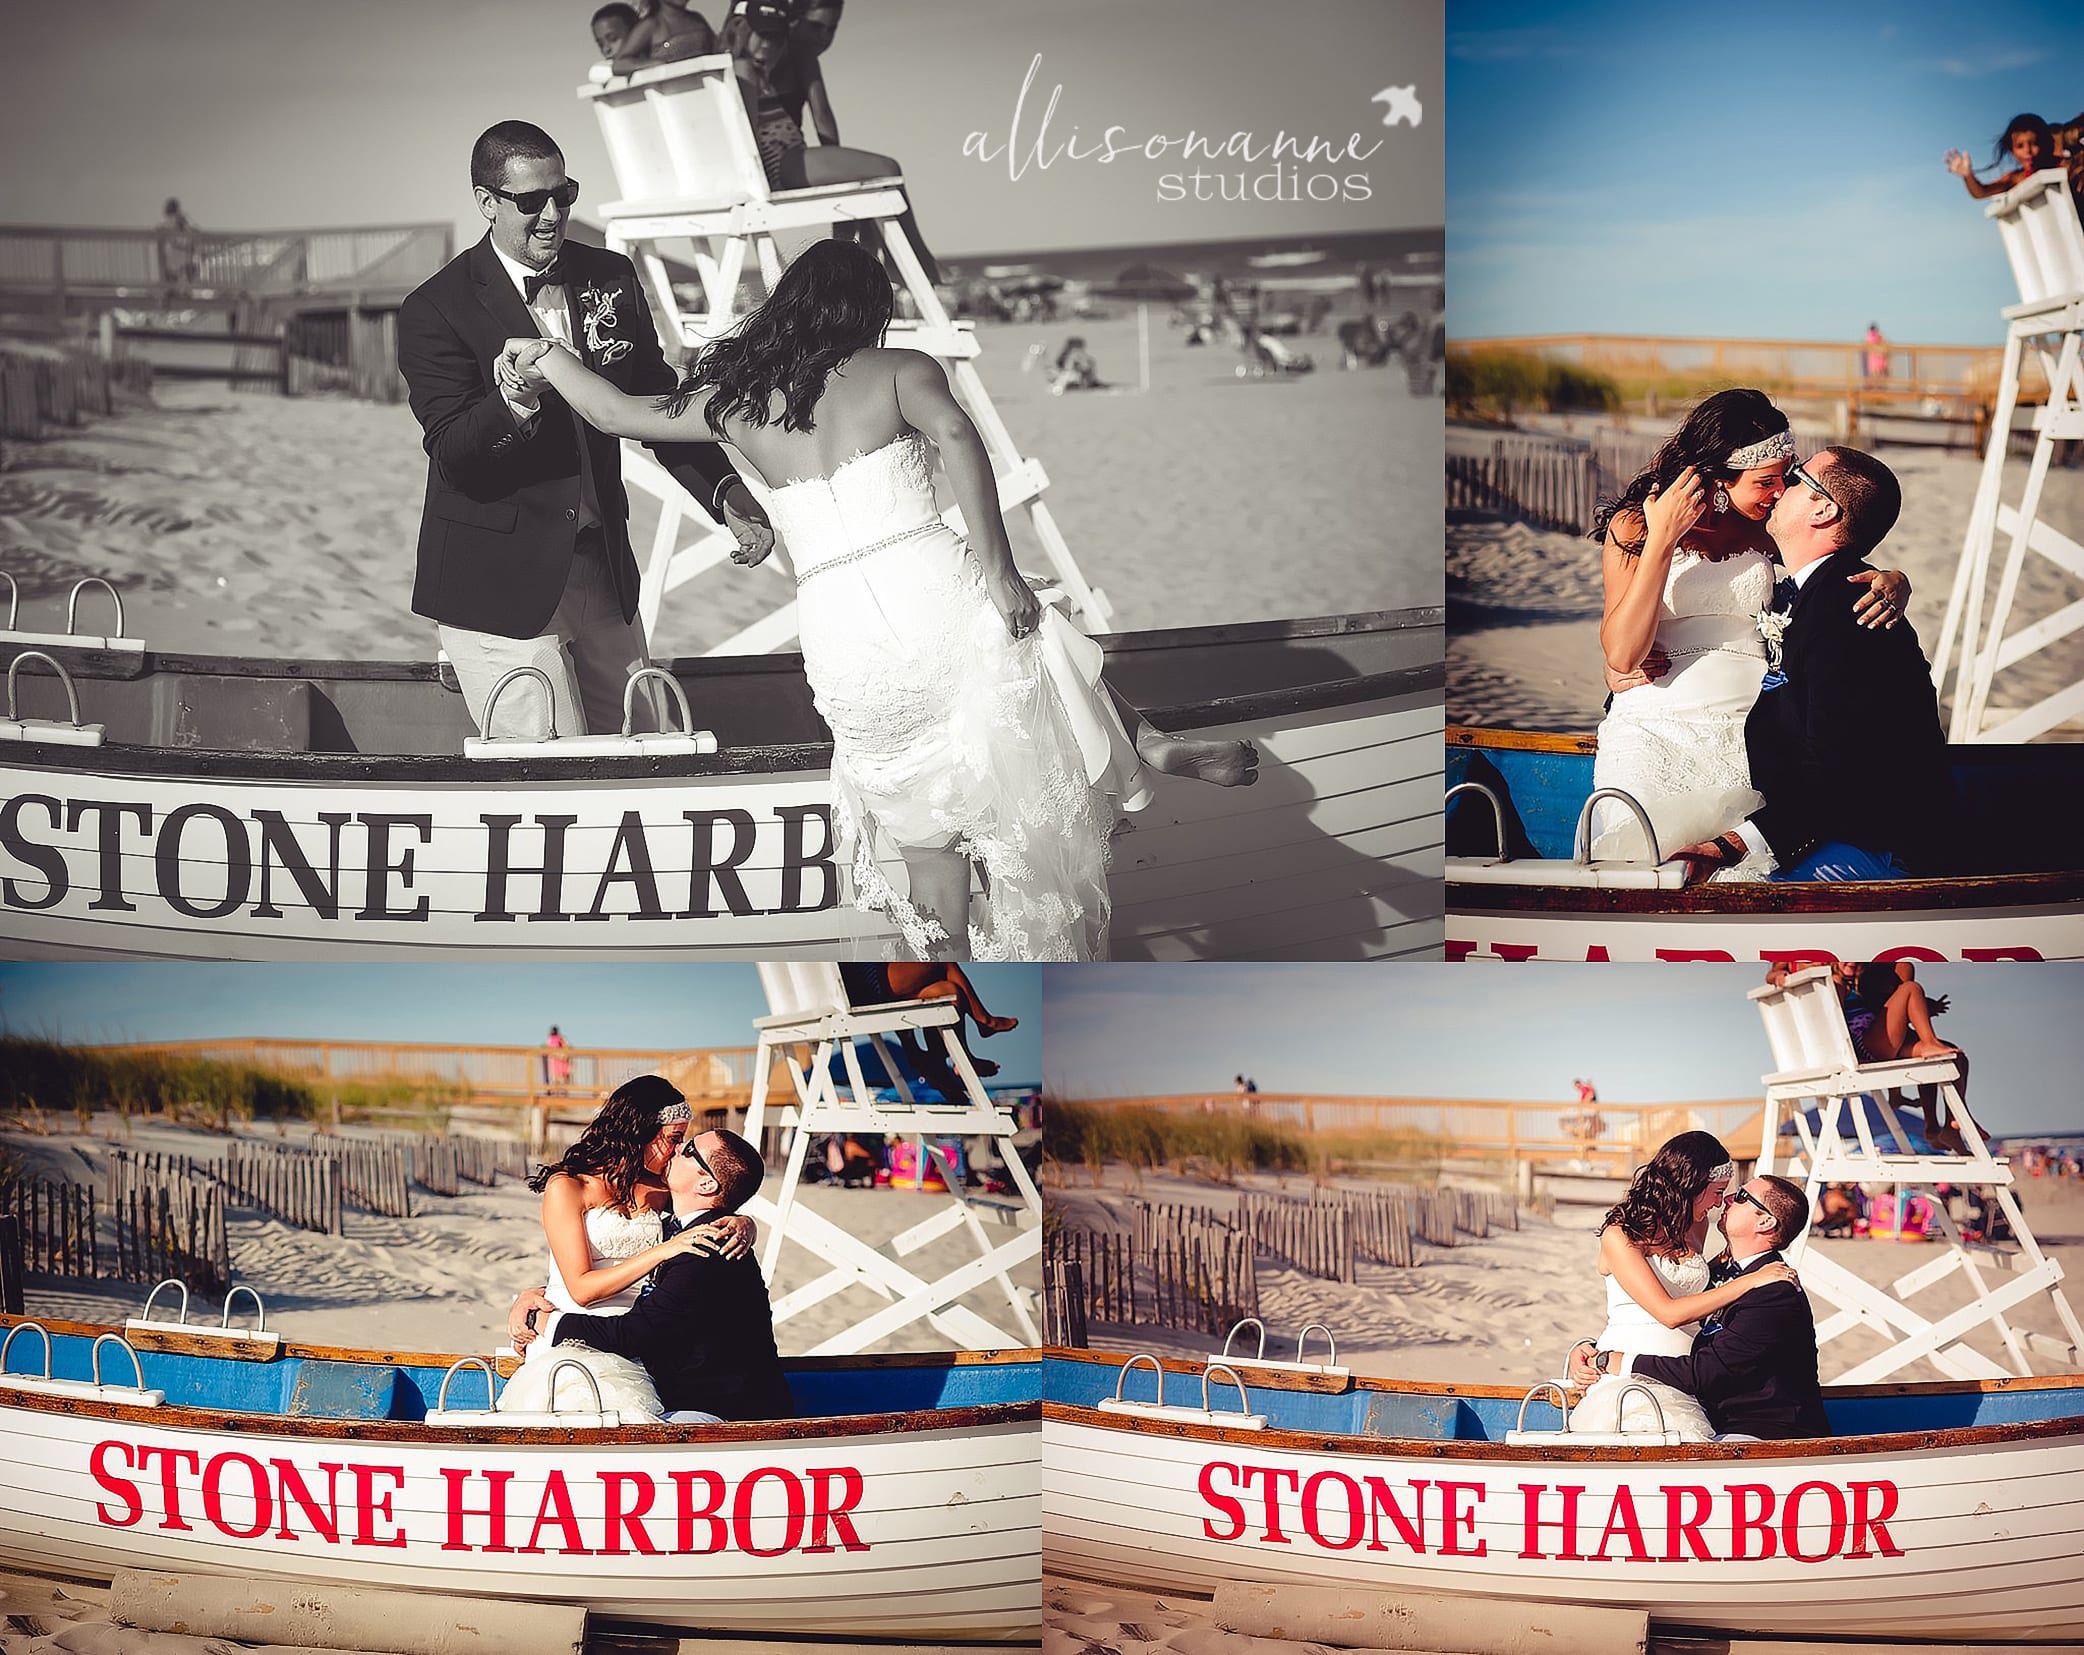 Best wedding Photographer South Jersey, bridal headband, beach wedding, Jersey Shore, Stone Harbor, 80 South Productions, AllisonAnne Studios, lovebirds, Hammonton, Allison Gallagher